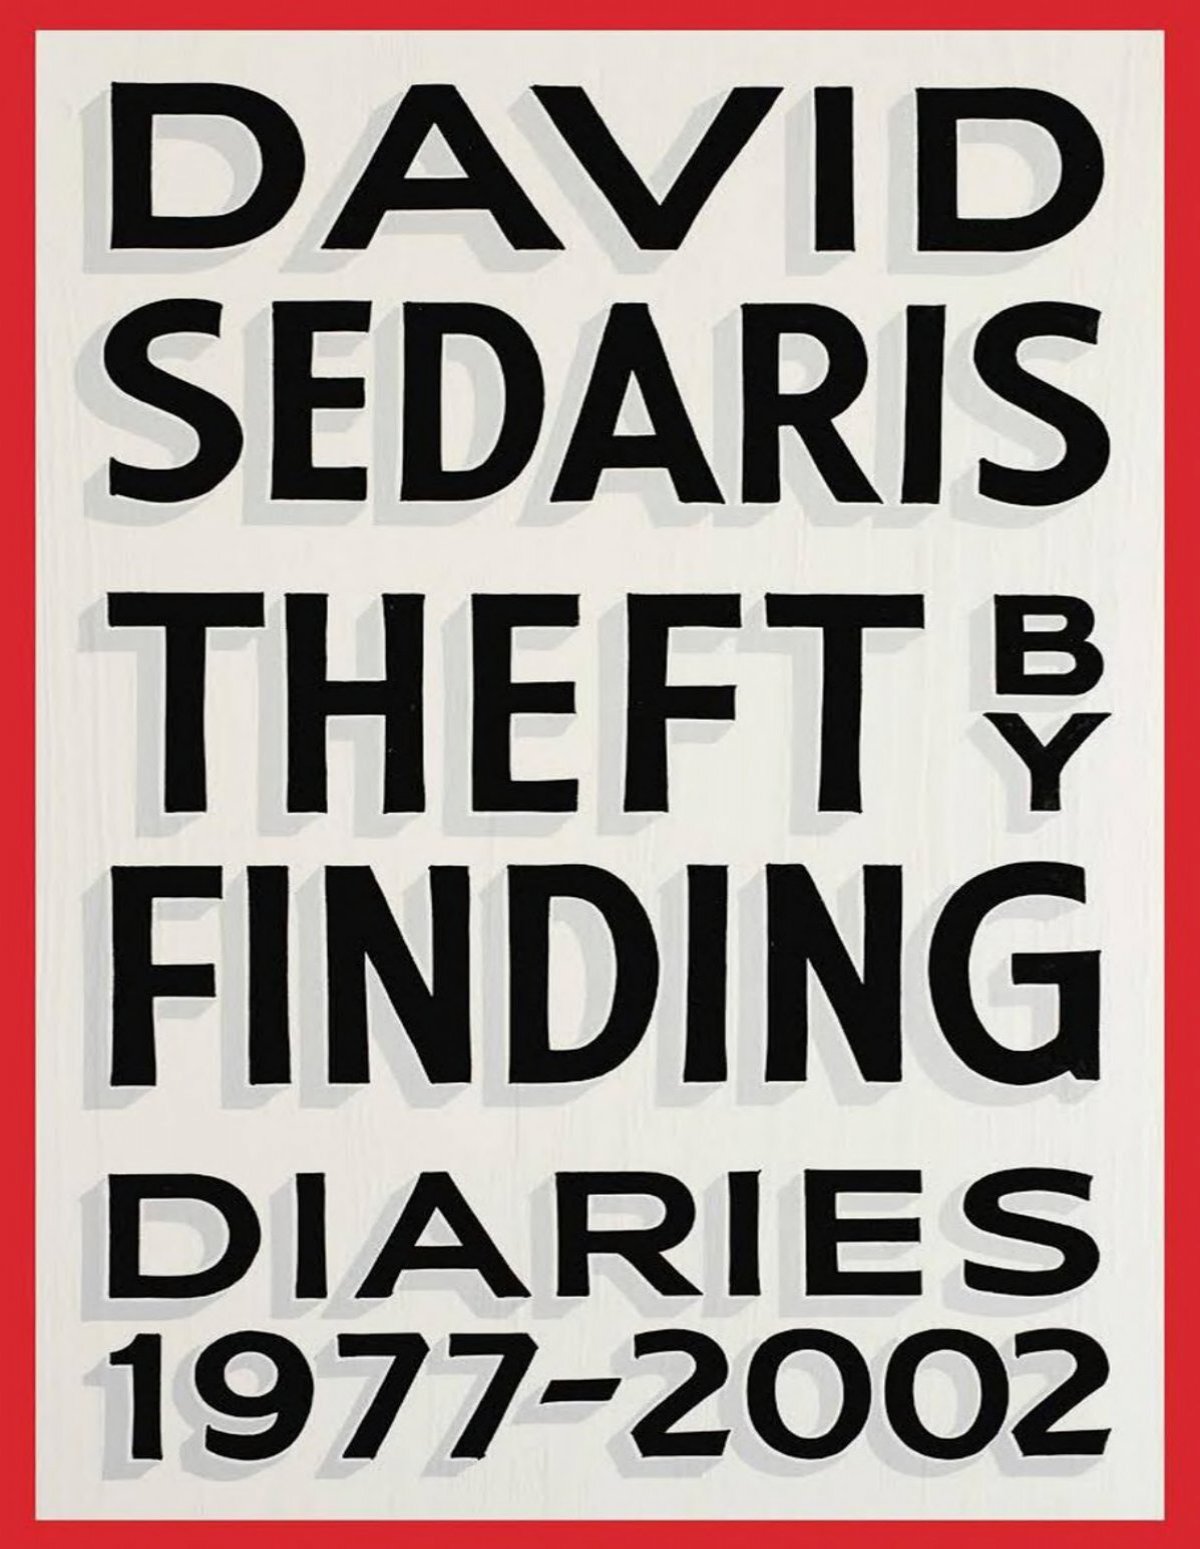 Theft by Finding - David Sedaris